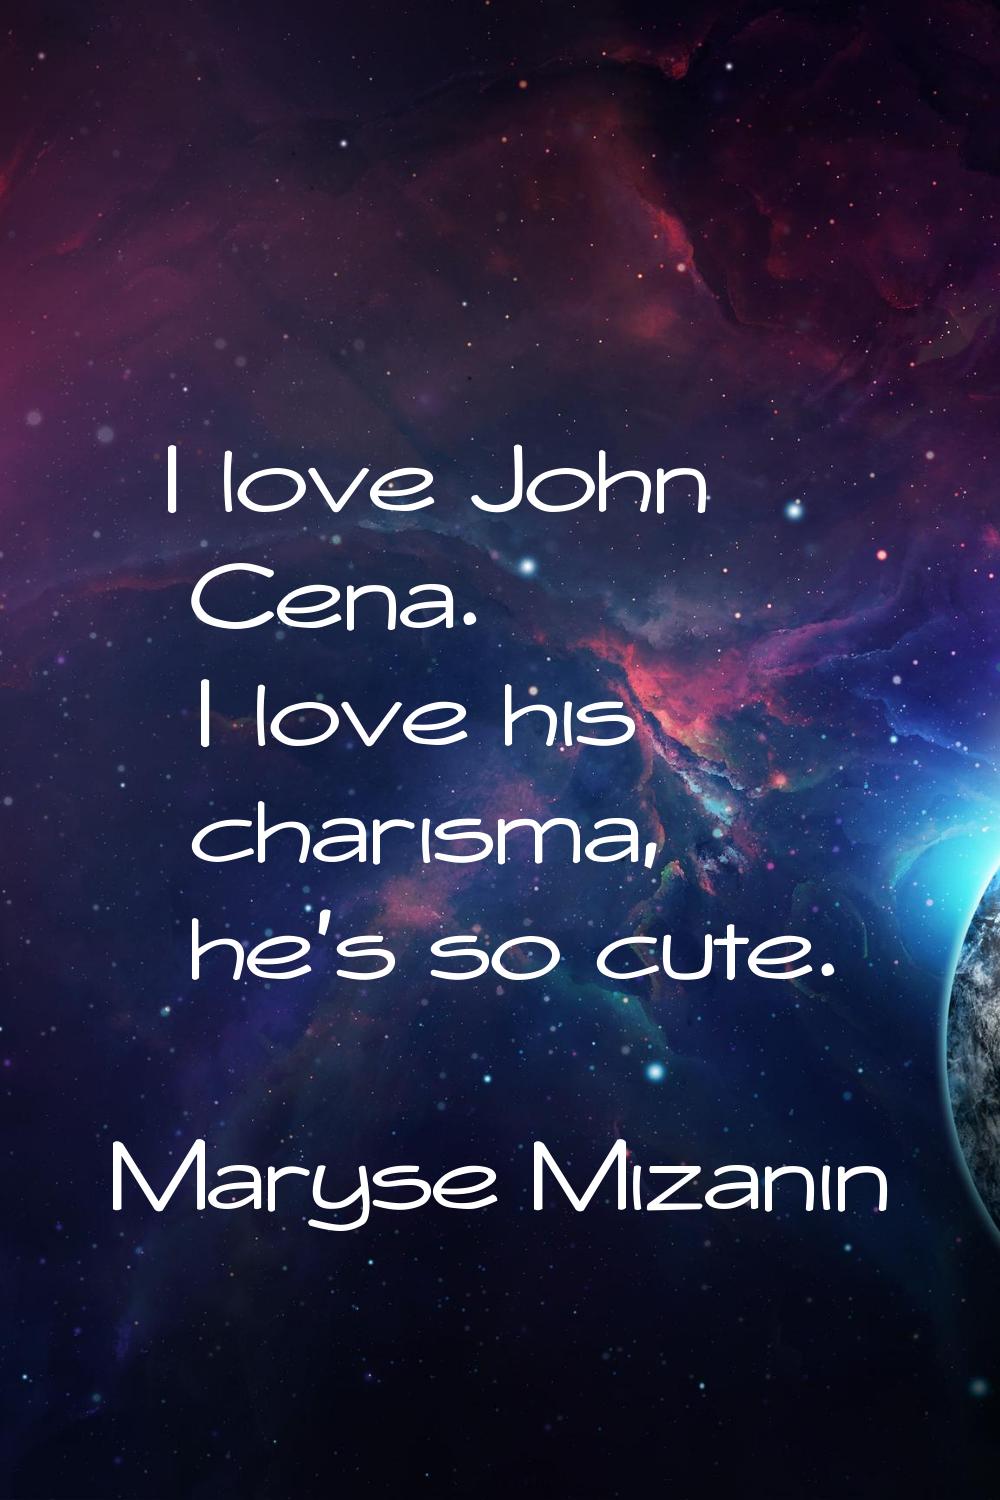 I love John Cena. I love his charisma, he's so cute.